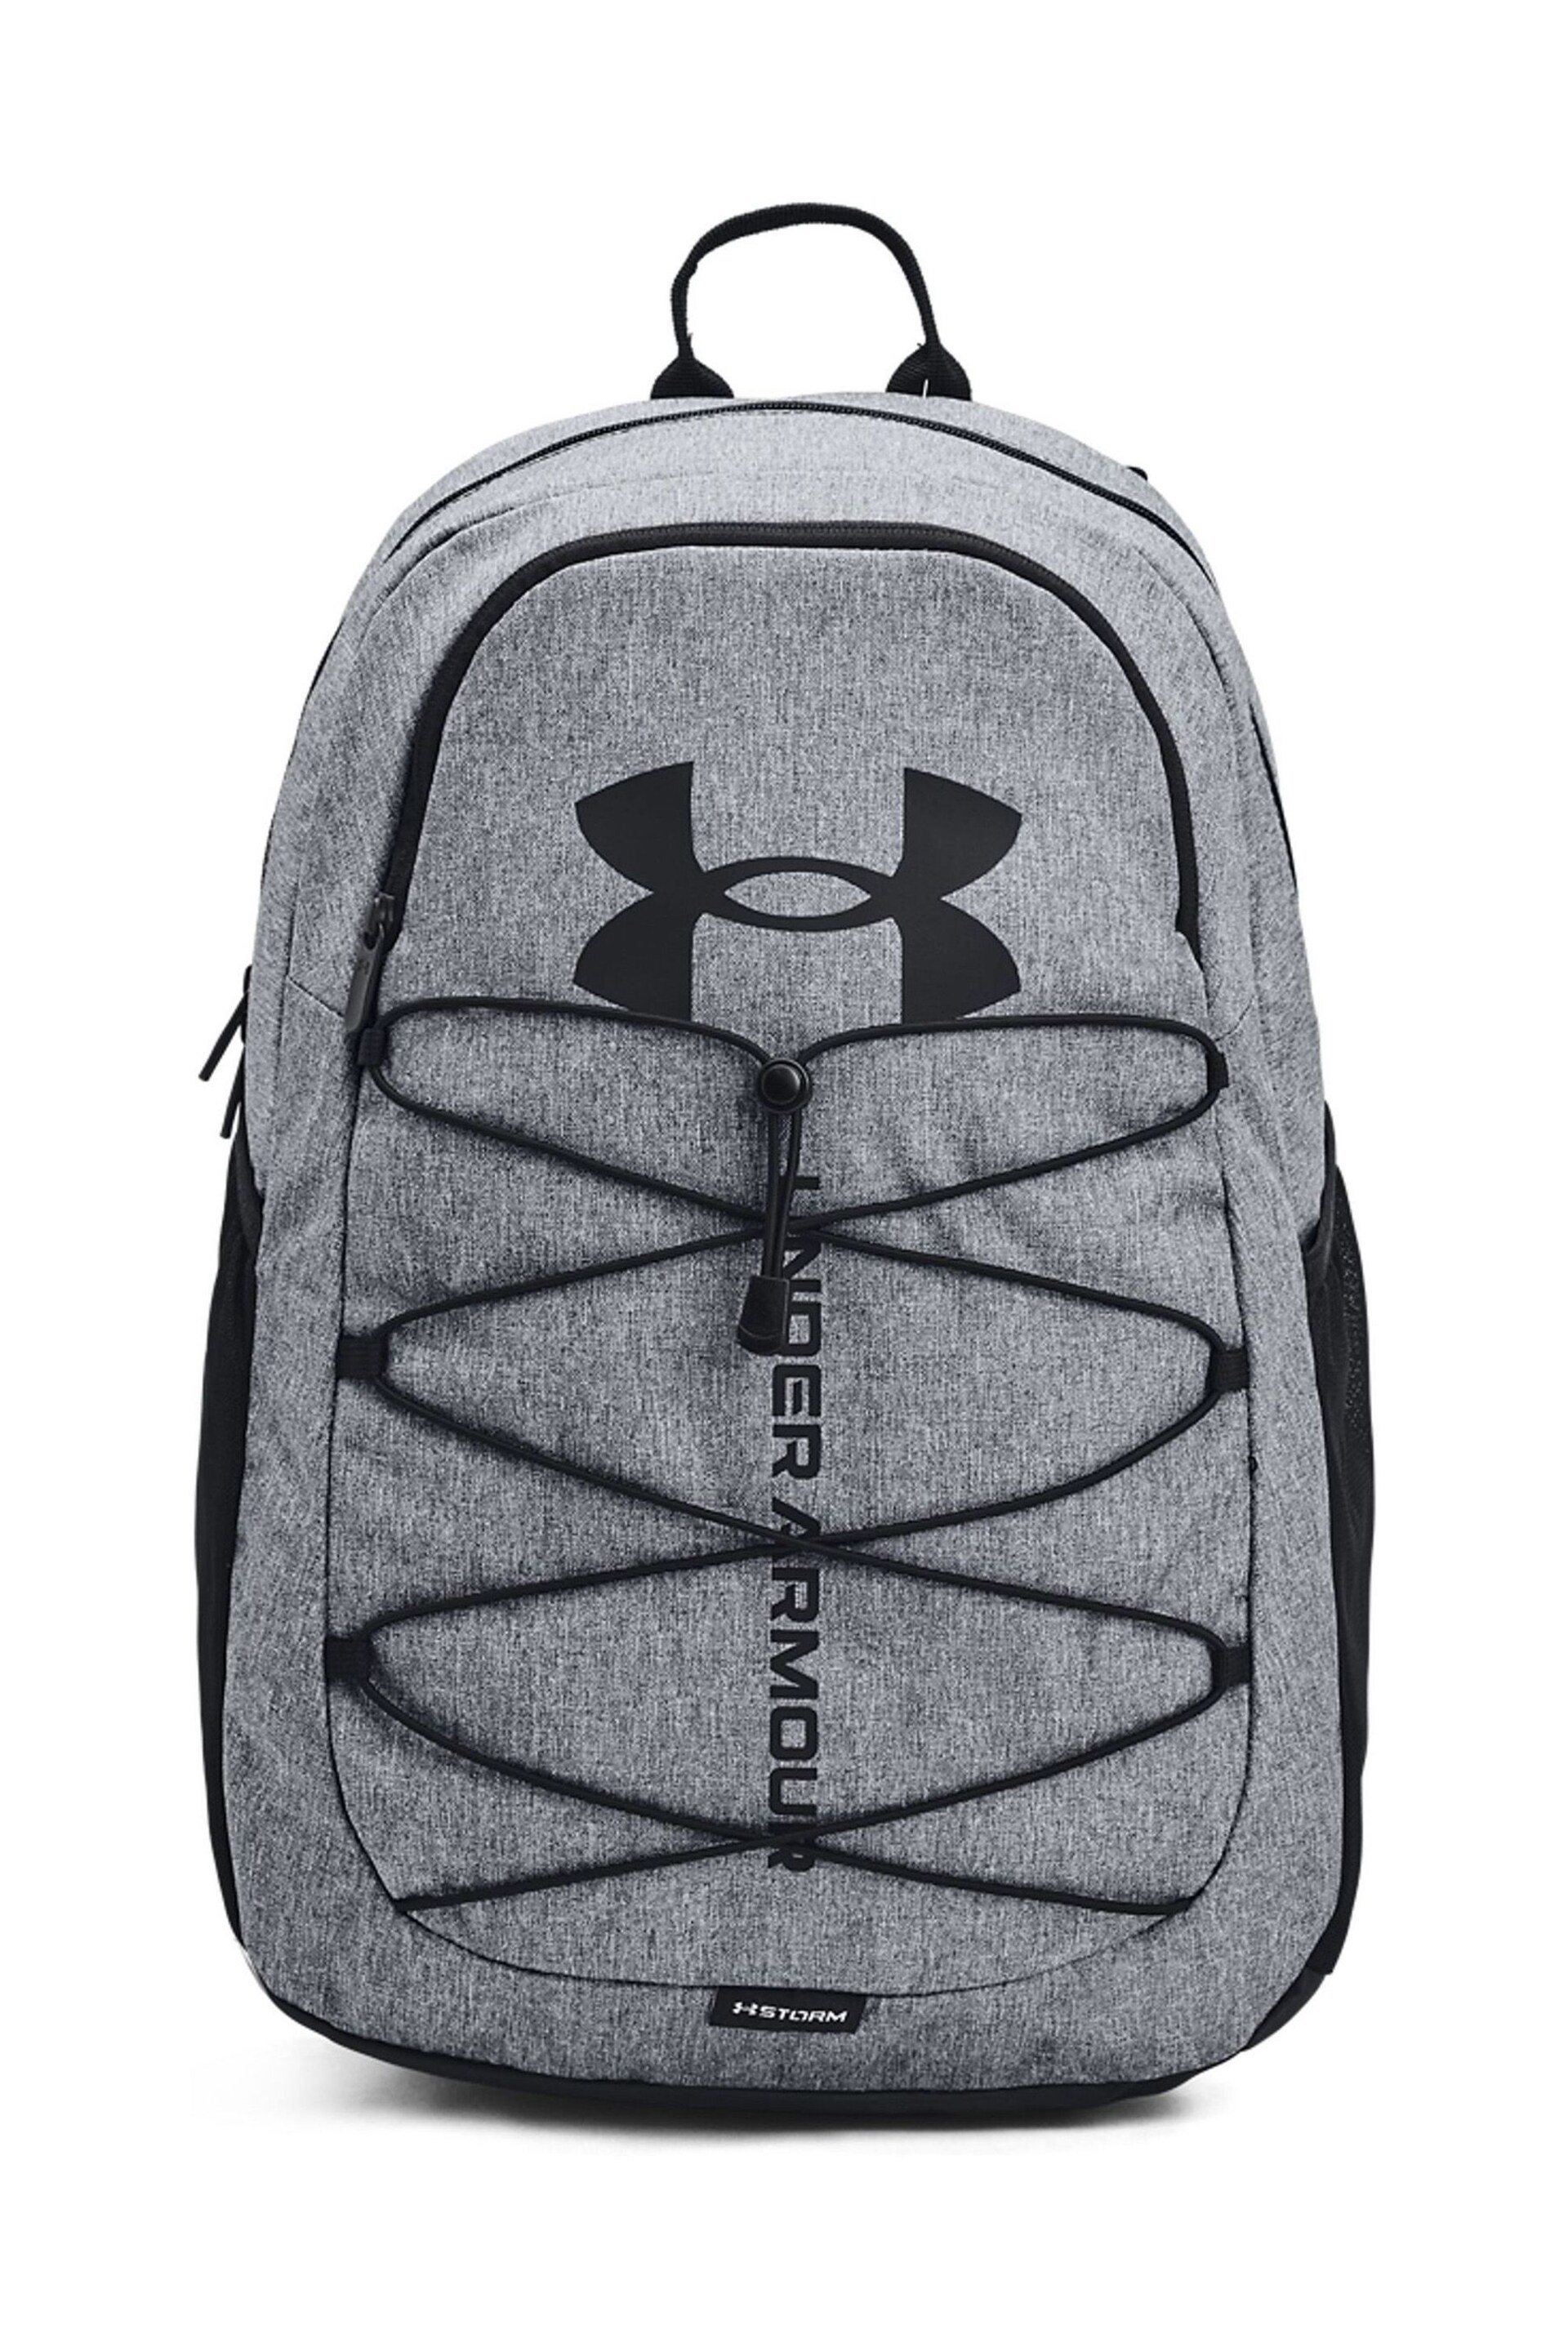 Under Armour Grey Hustle Sport Backpack - Image 2 of 7